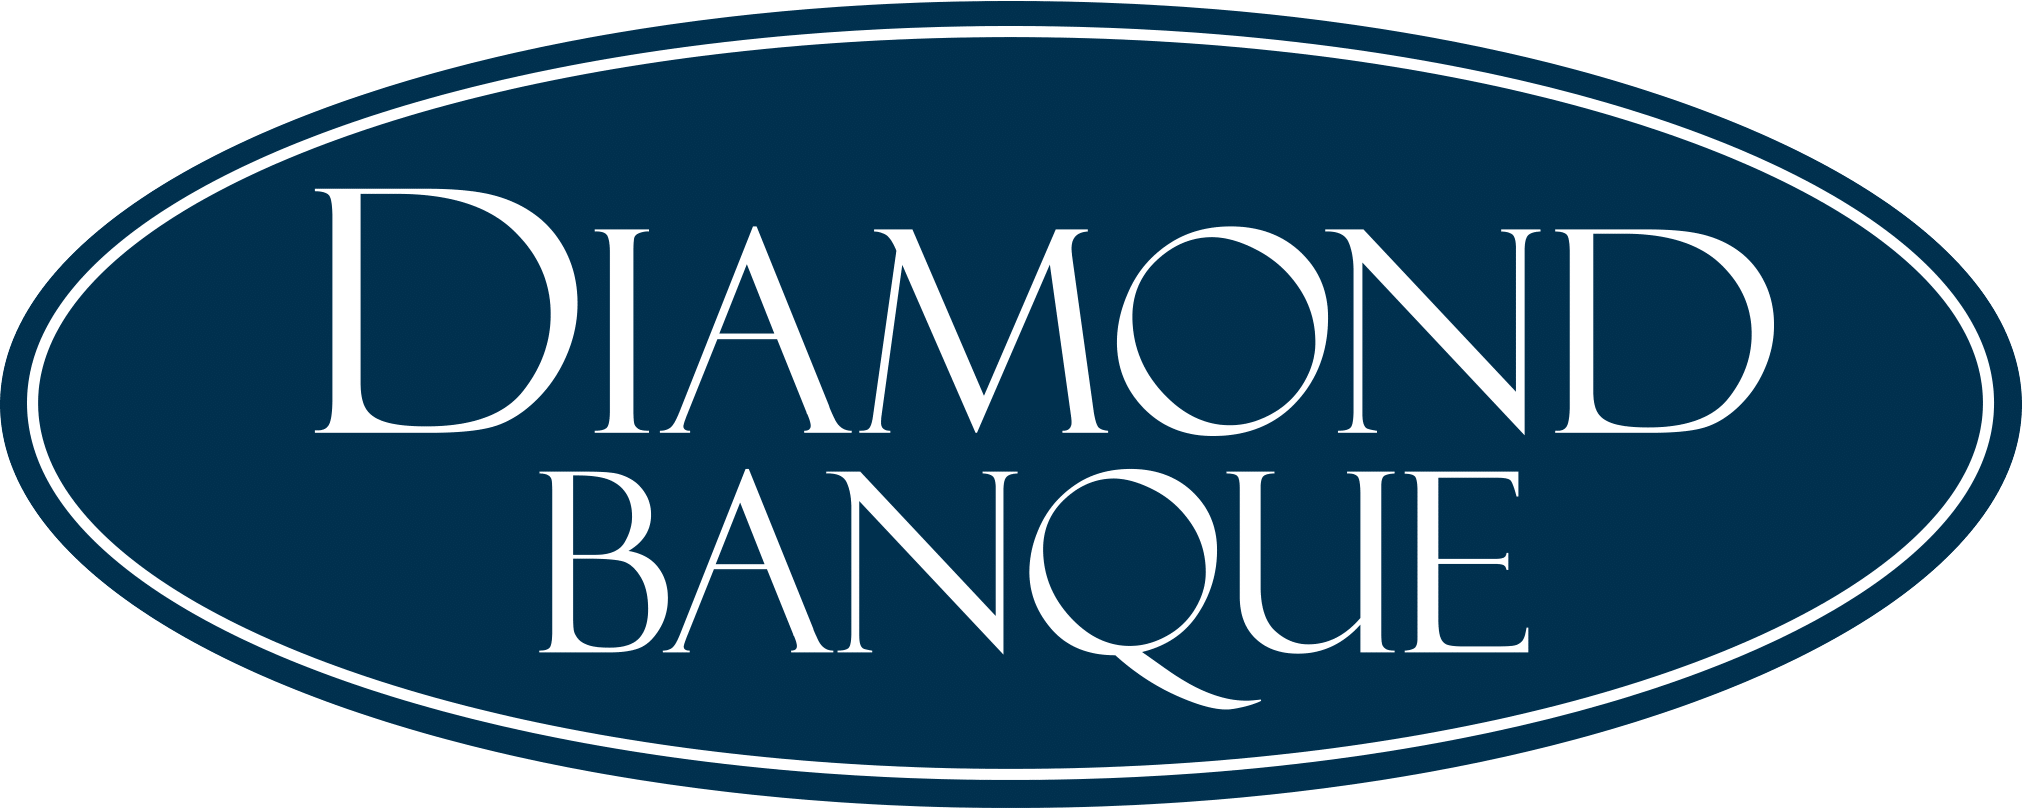 The Diamond Banque